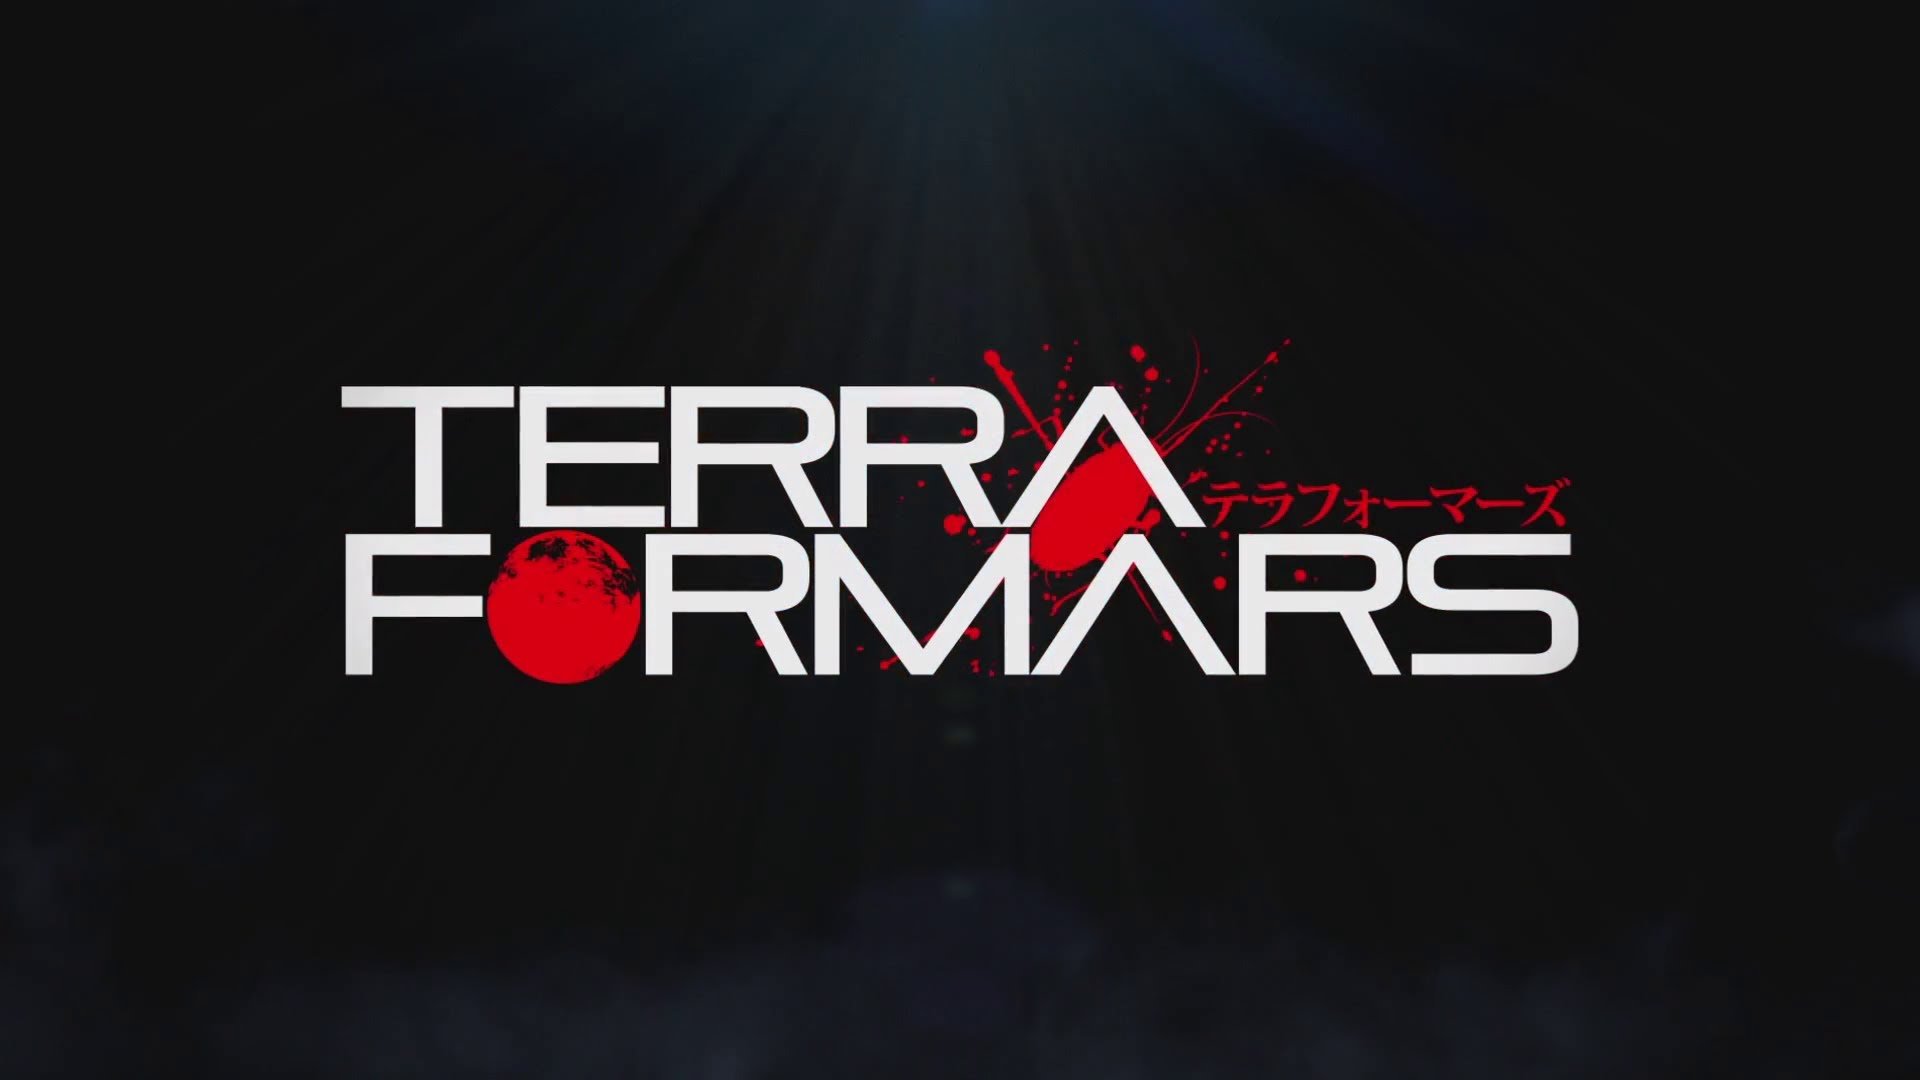 Best Terra Formars wallpaper ID:25504 for High Resolution hd 1080p computer